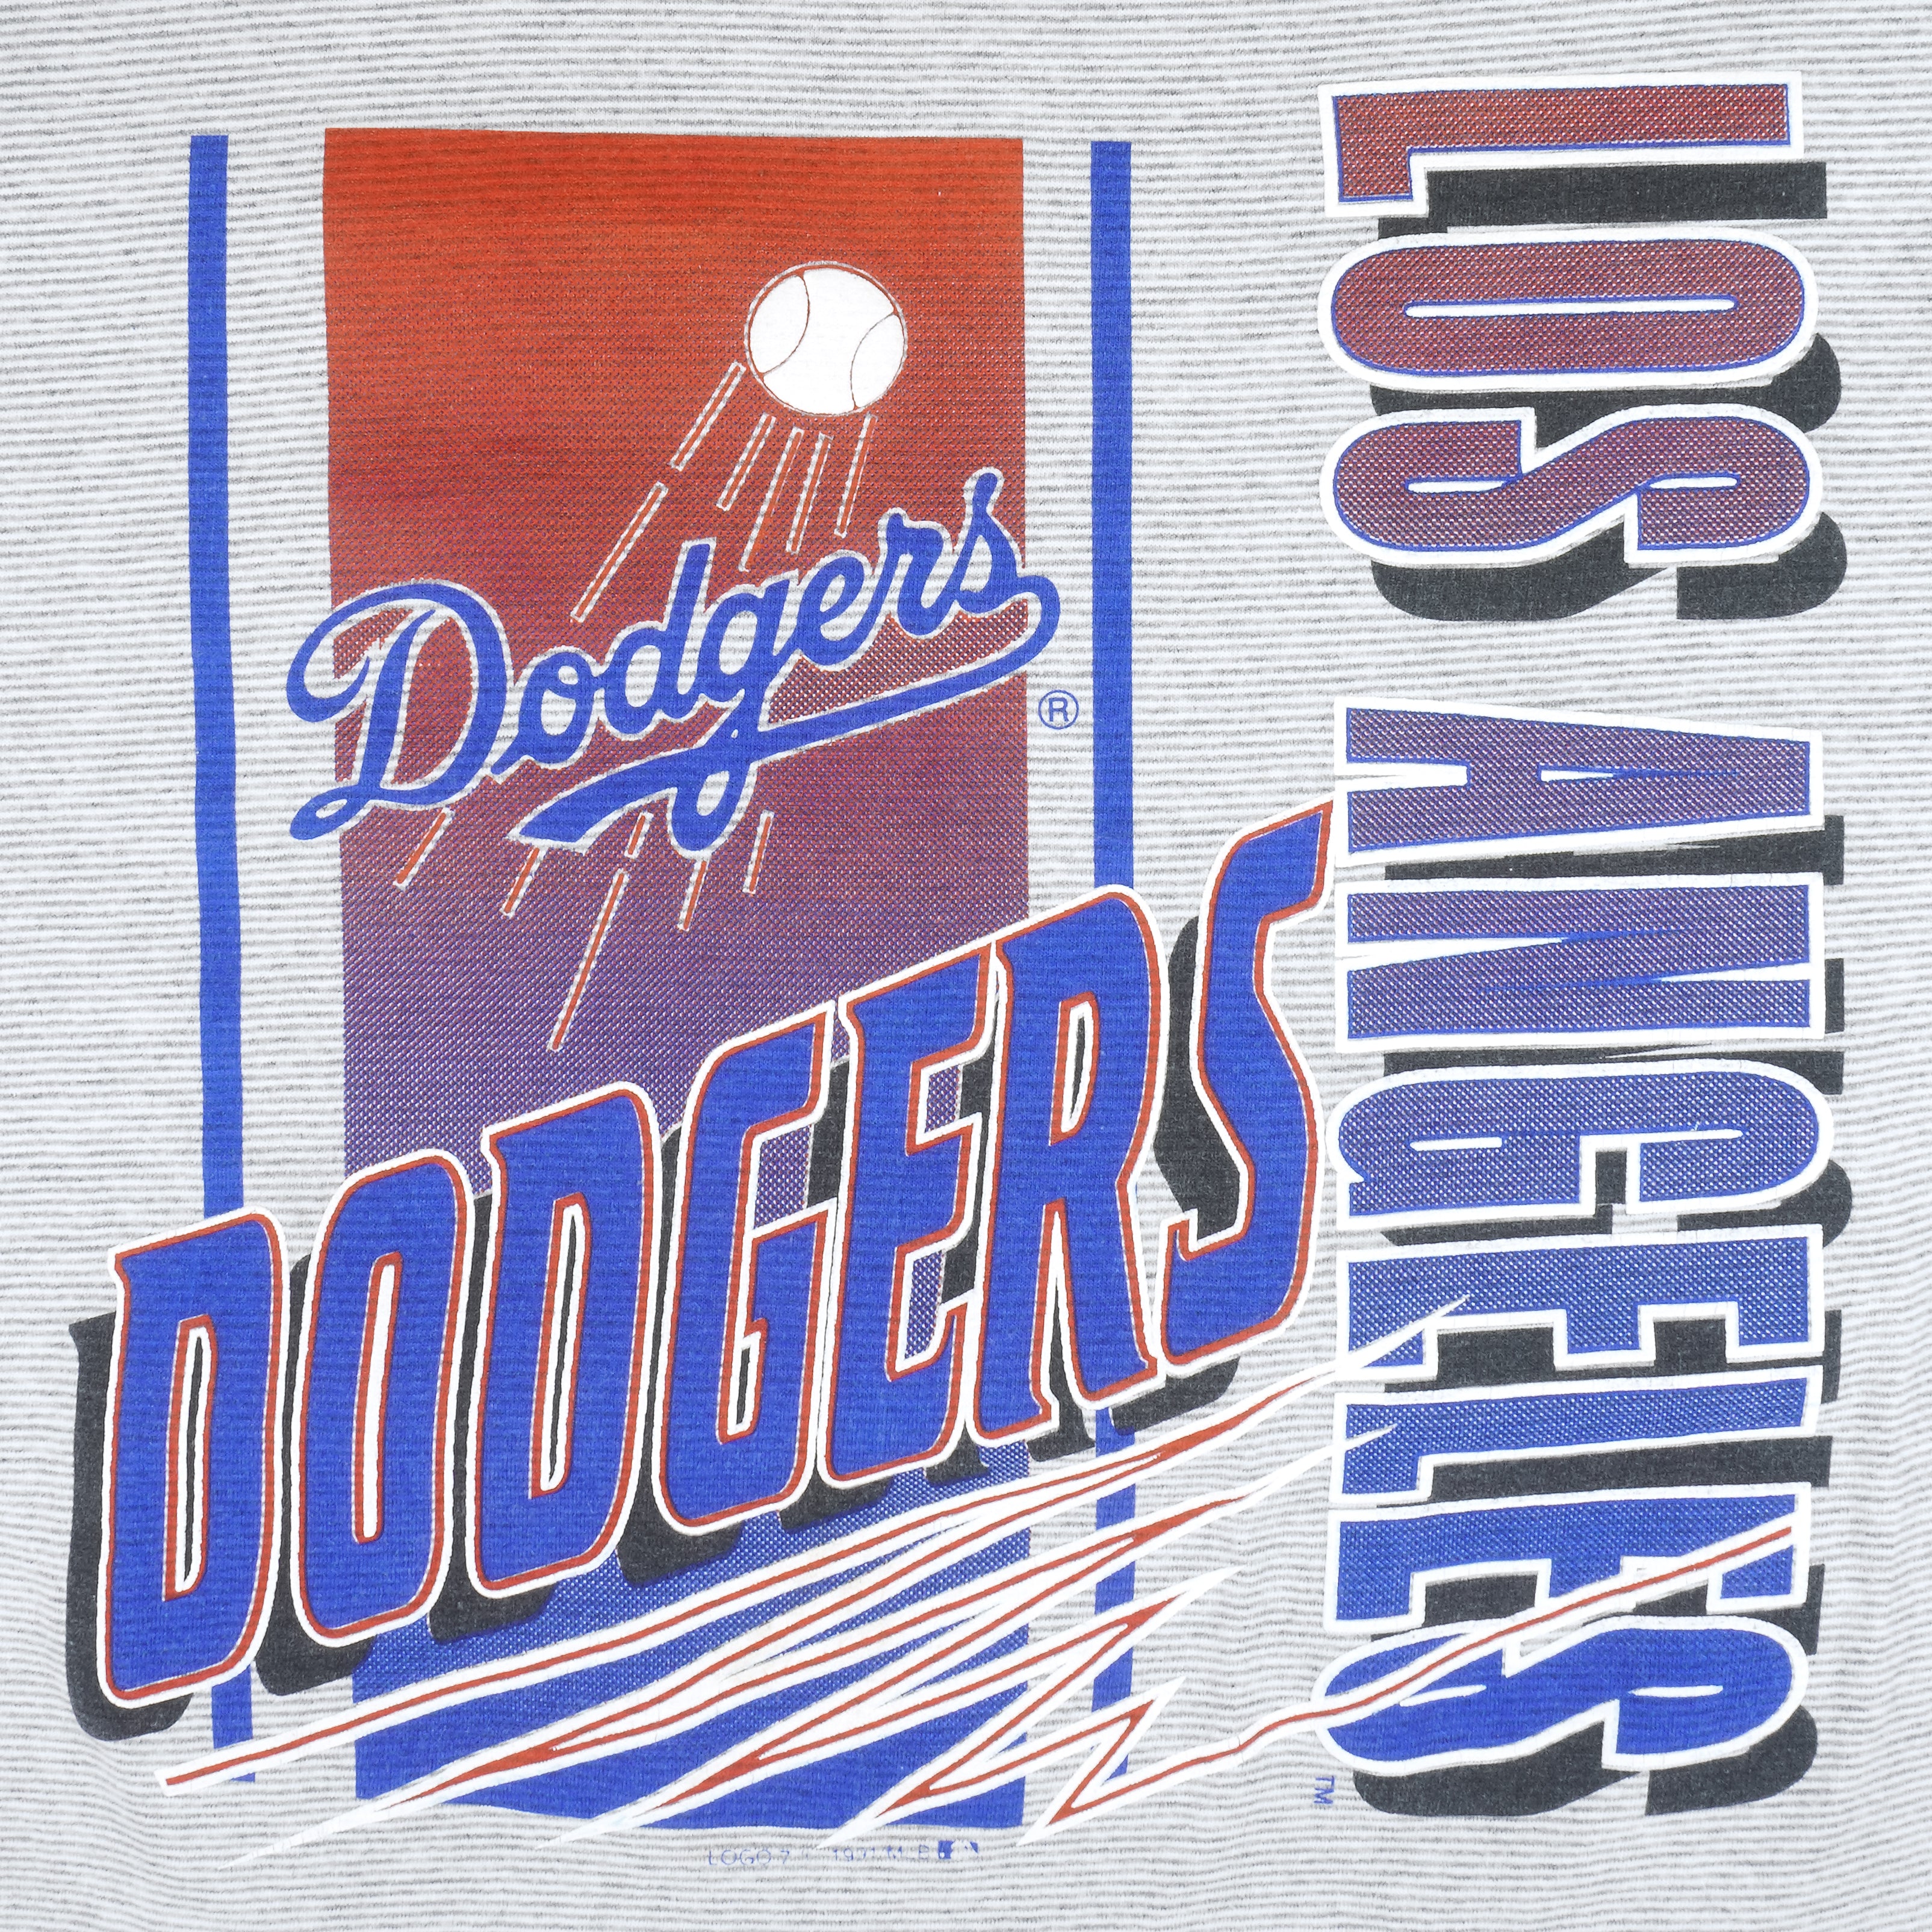 LOGO 7, Shirts, Vintage La Dodgers Logo 7 Shirt